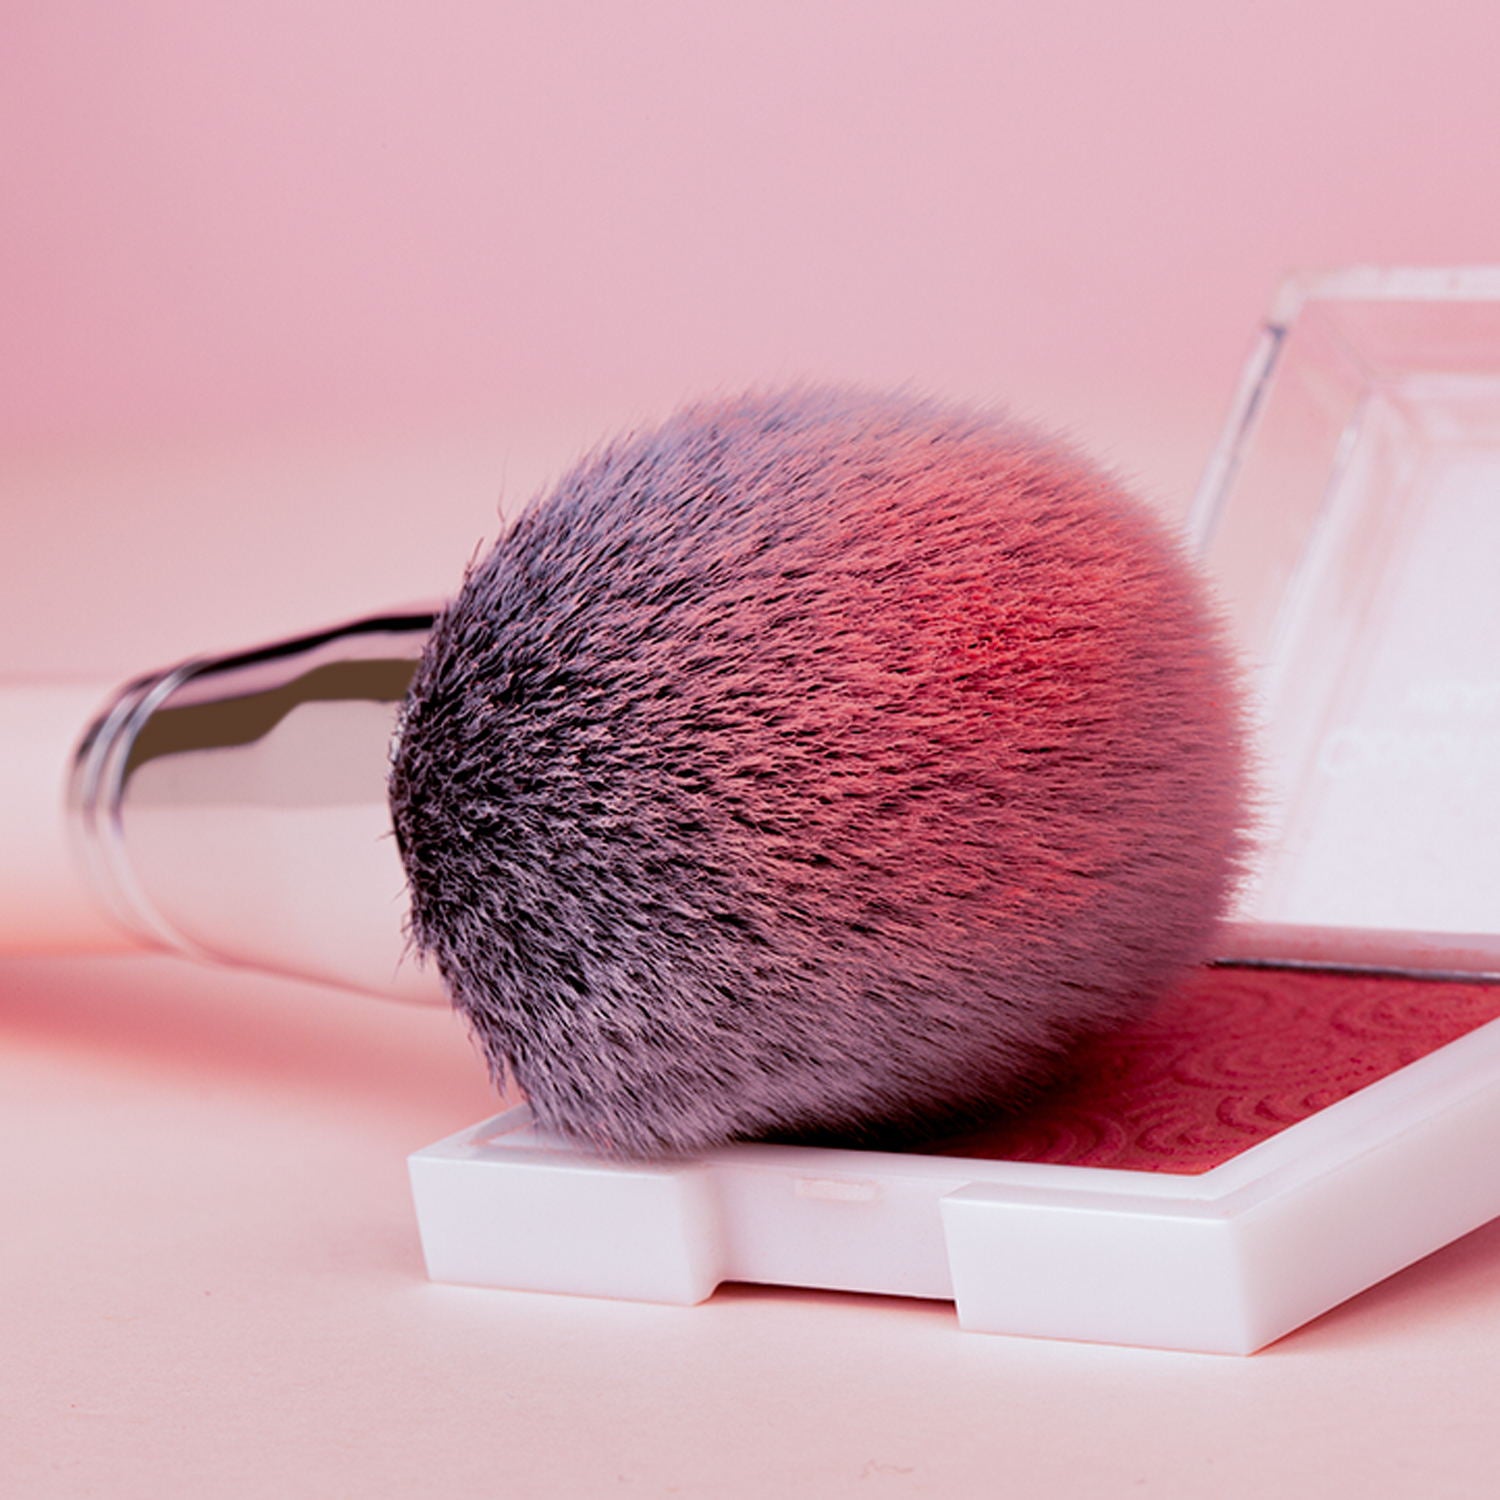 FREYARA Professional Makeup Brushes Set 25pcs Glitter Pink with